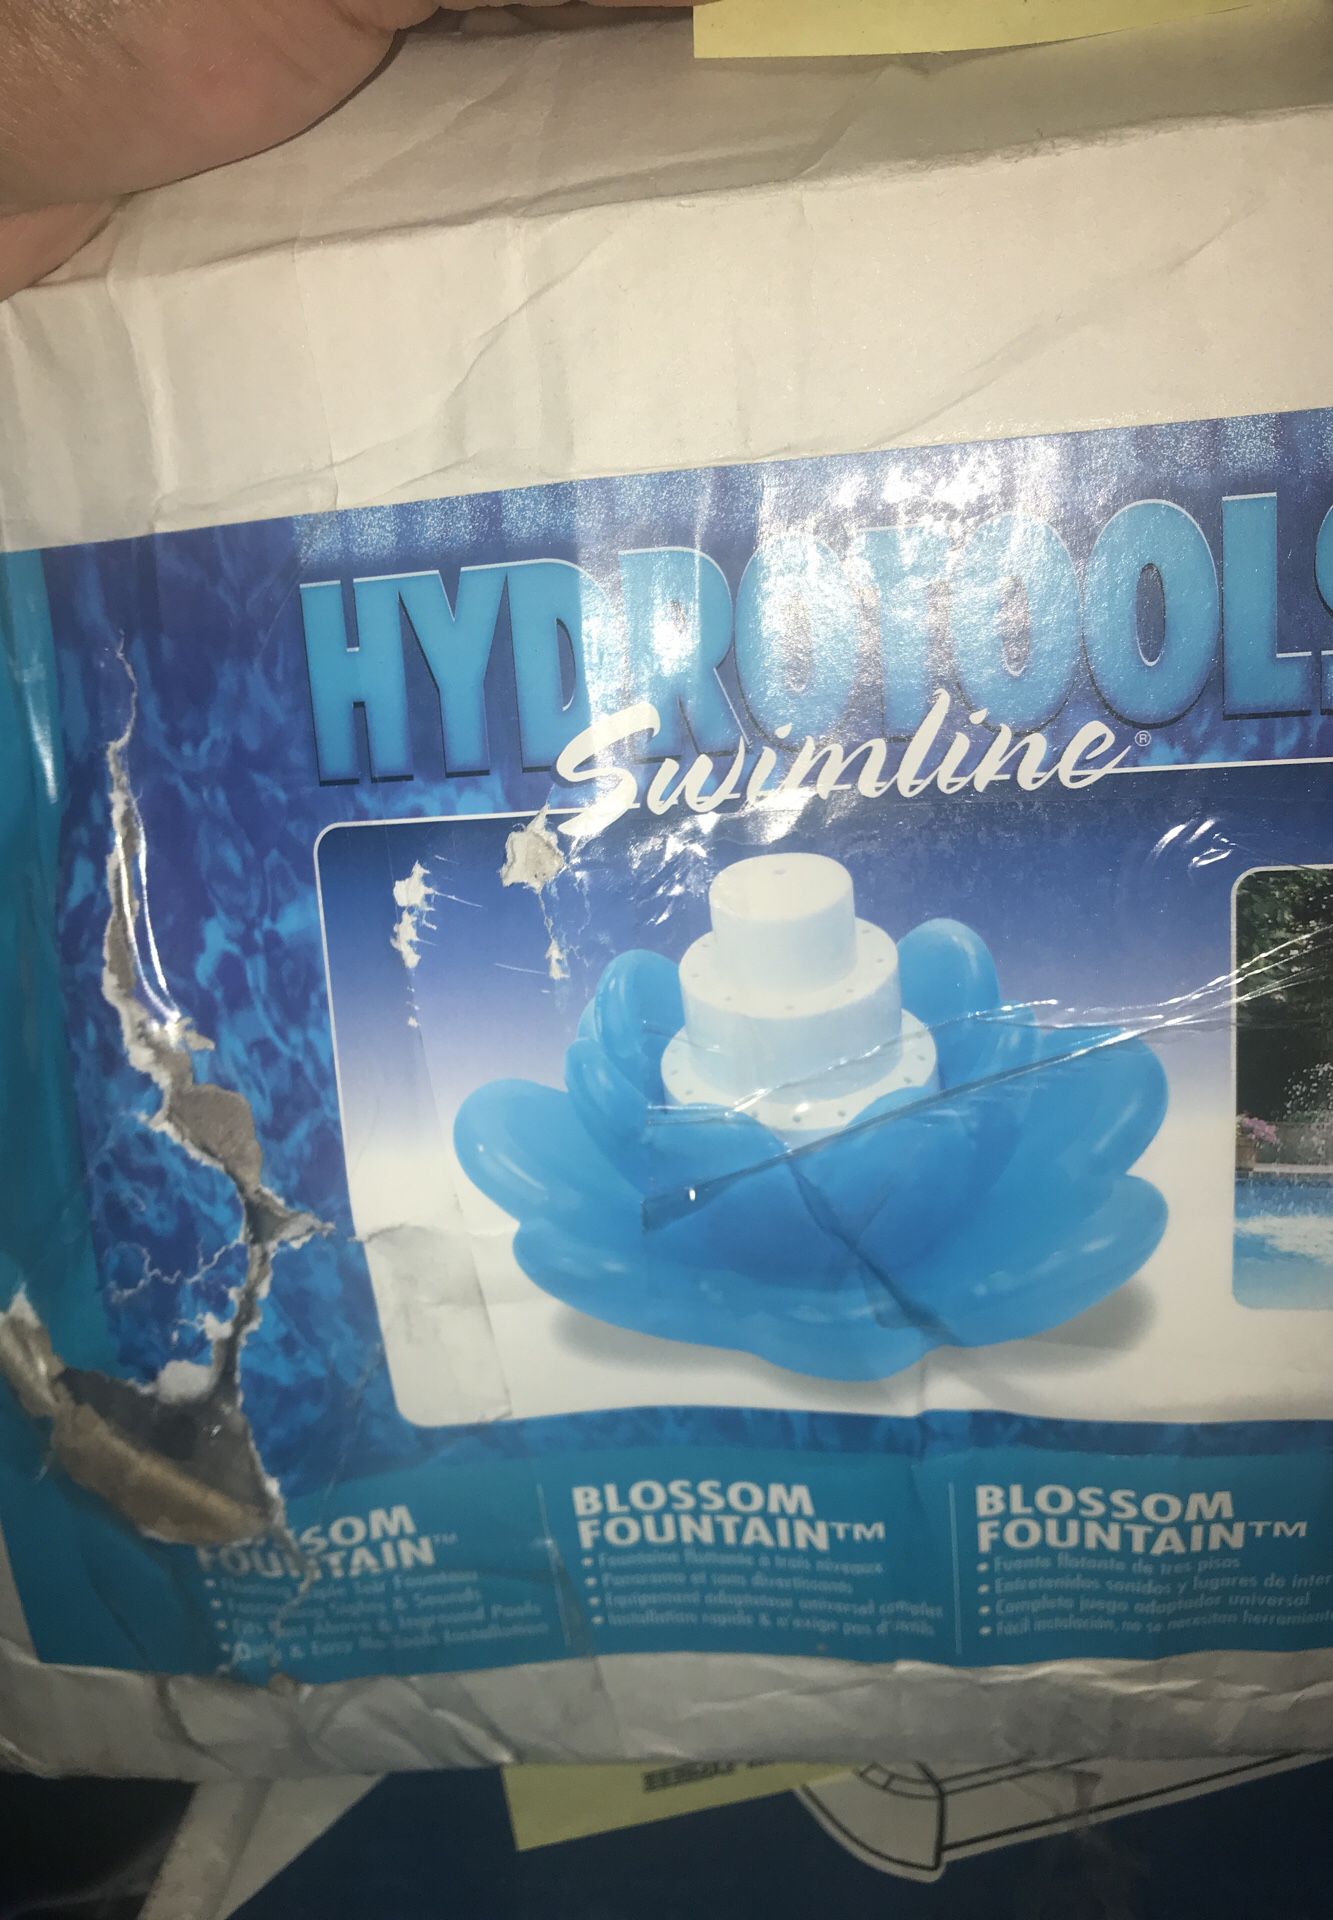 Blossom fountain-hydrotools swimline